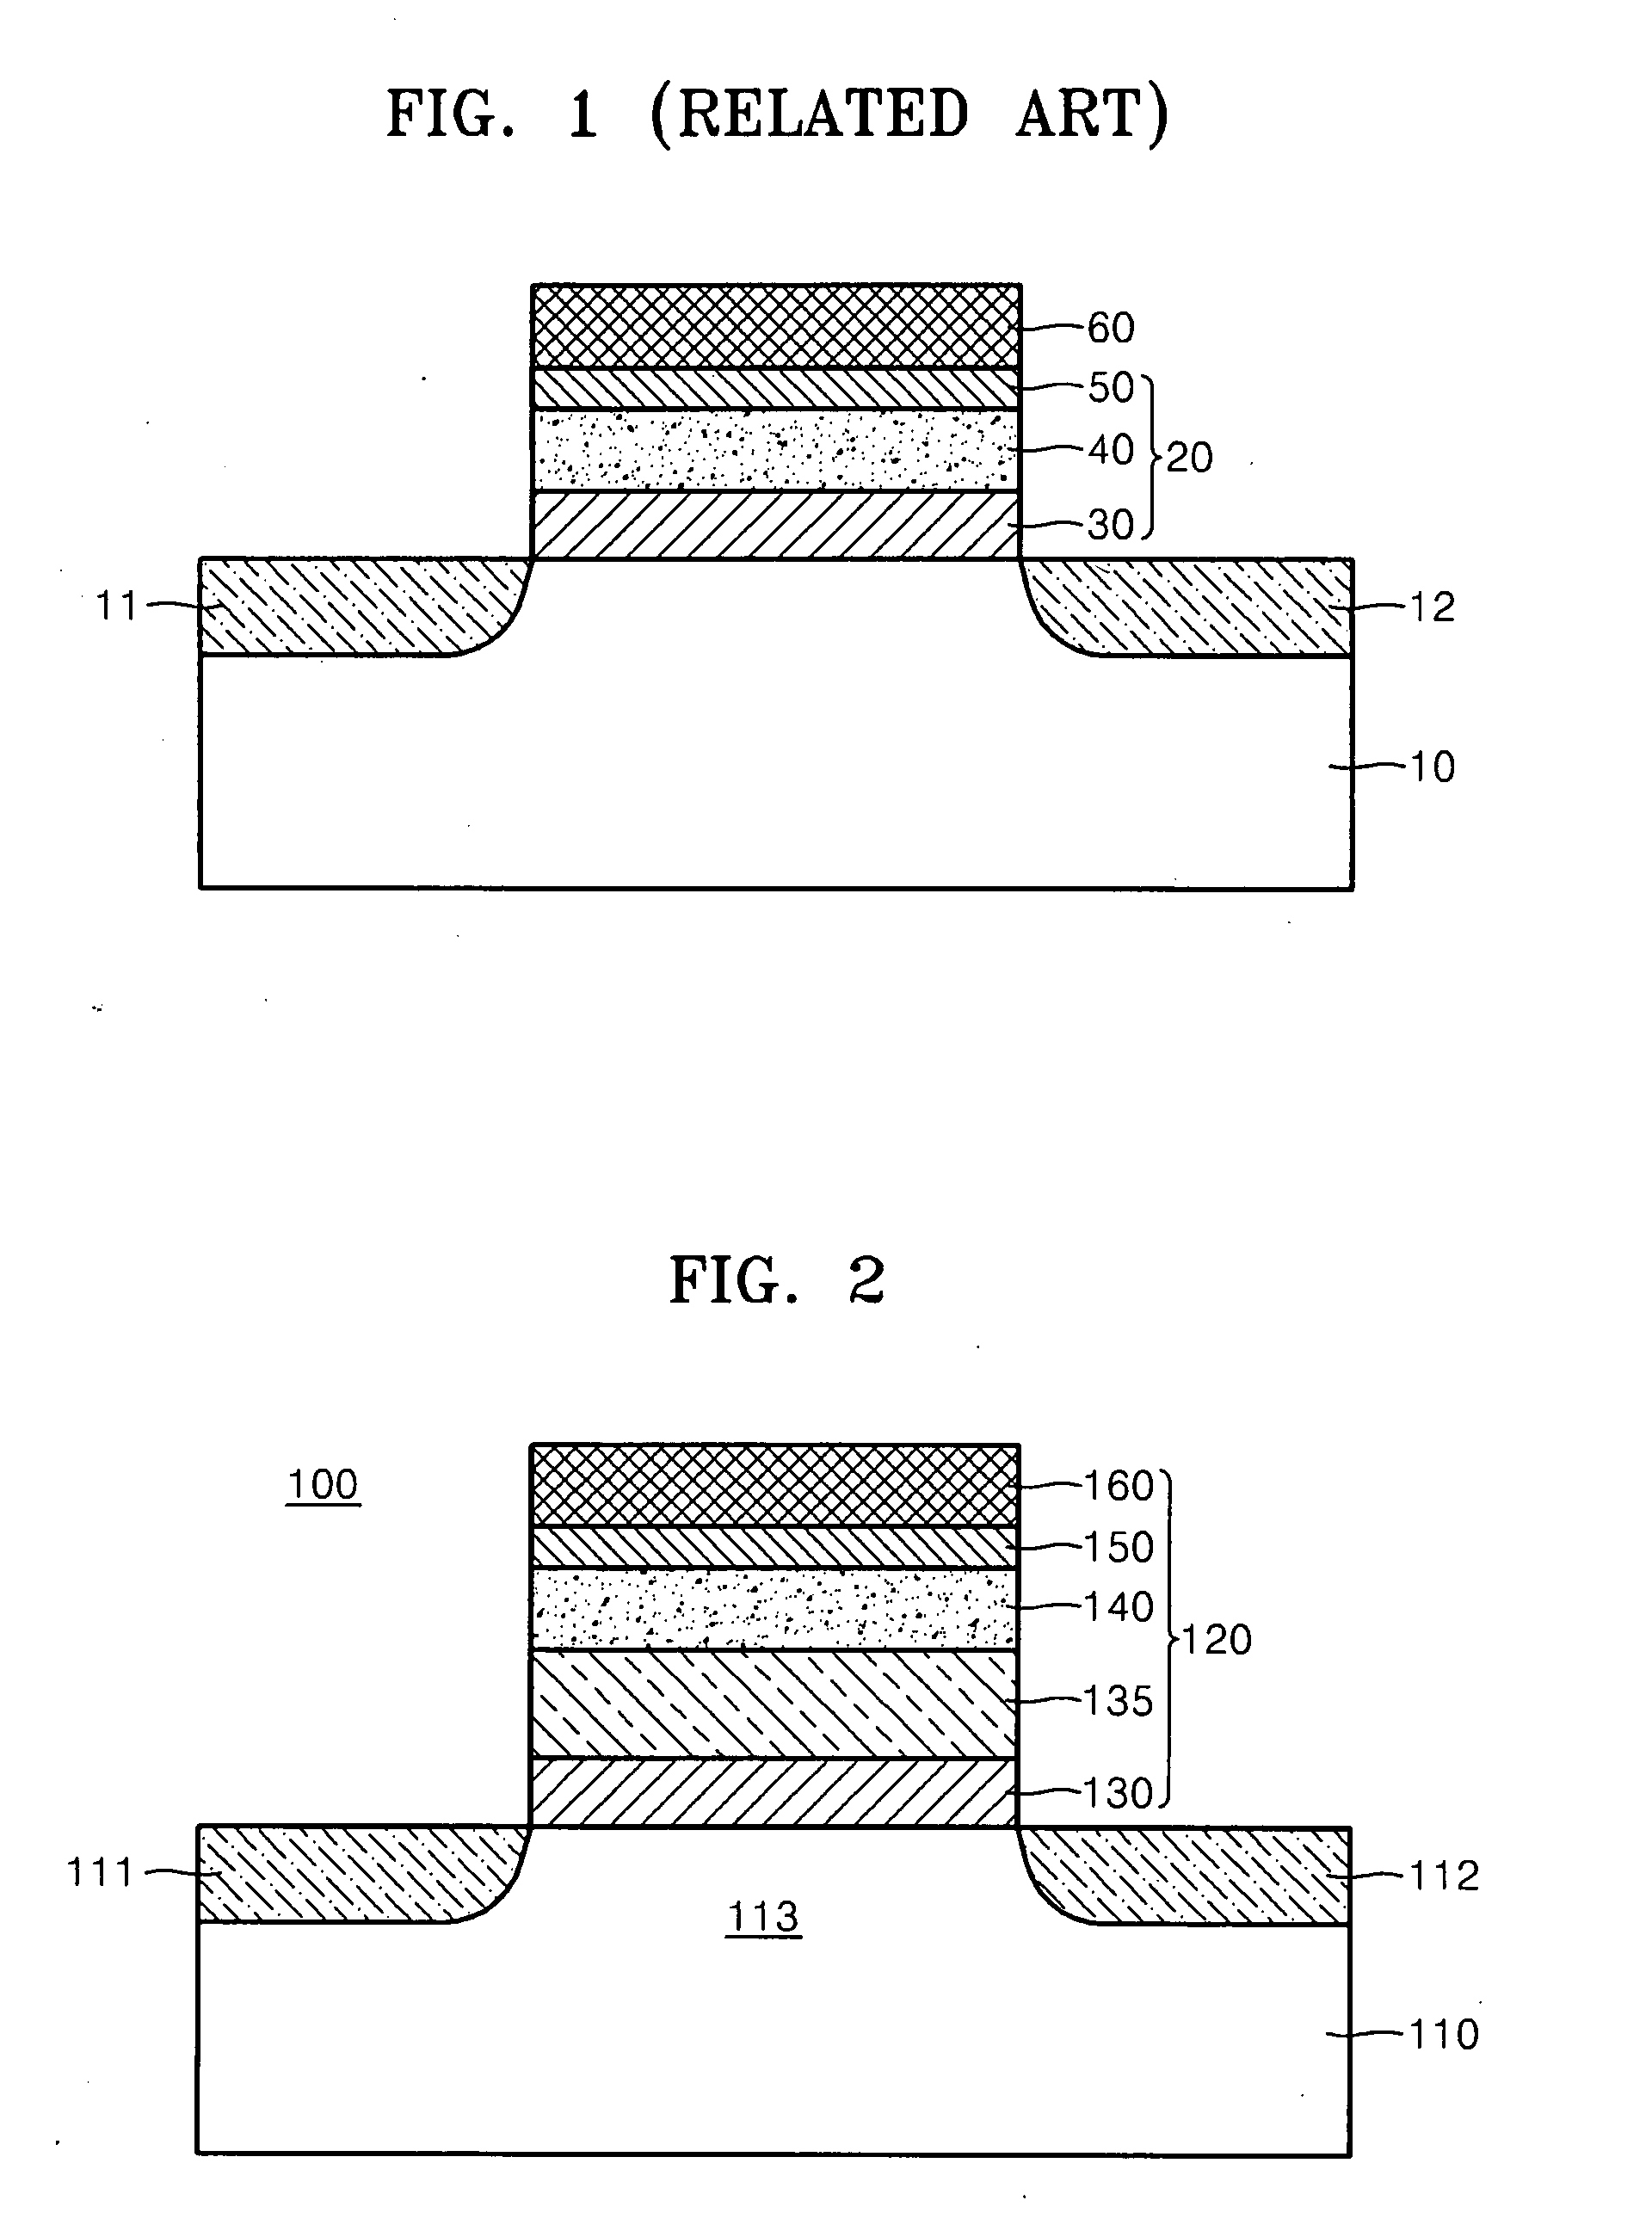 Non-volatile memory device including metal-insulator transition material